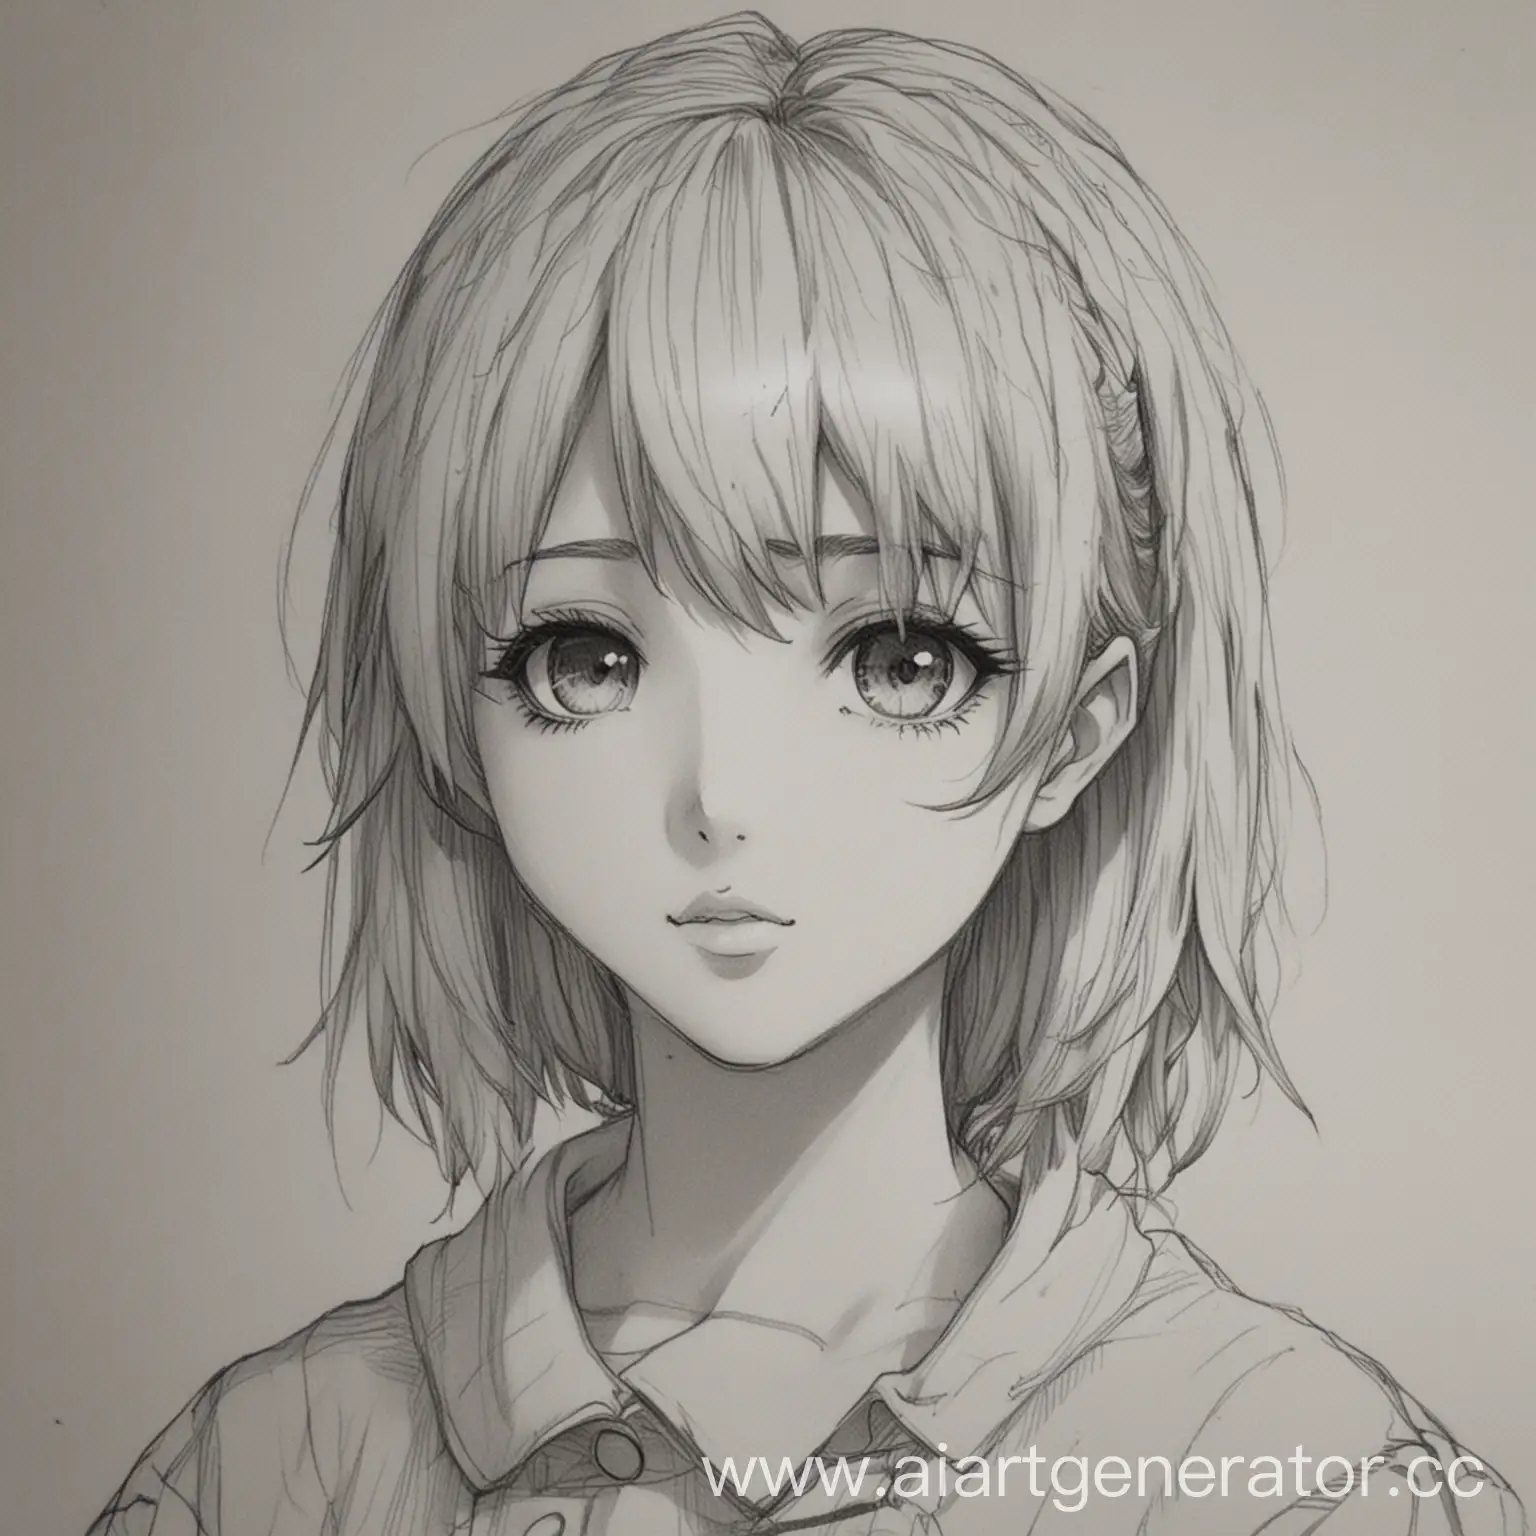 Sketch-Drawing-of-a-Anime-Girl-Creator